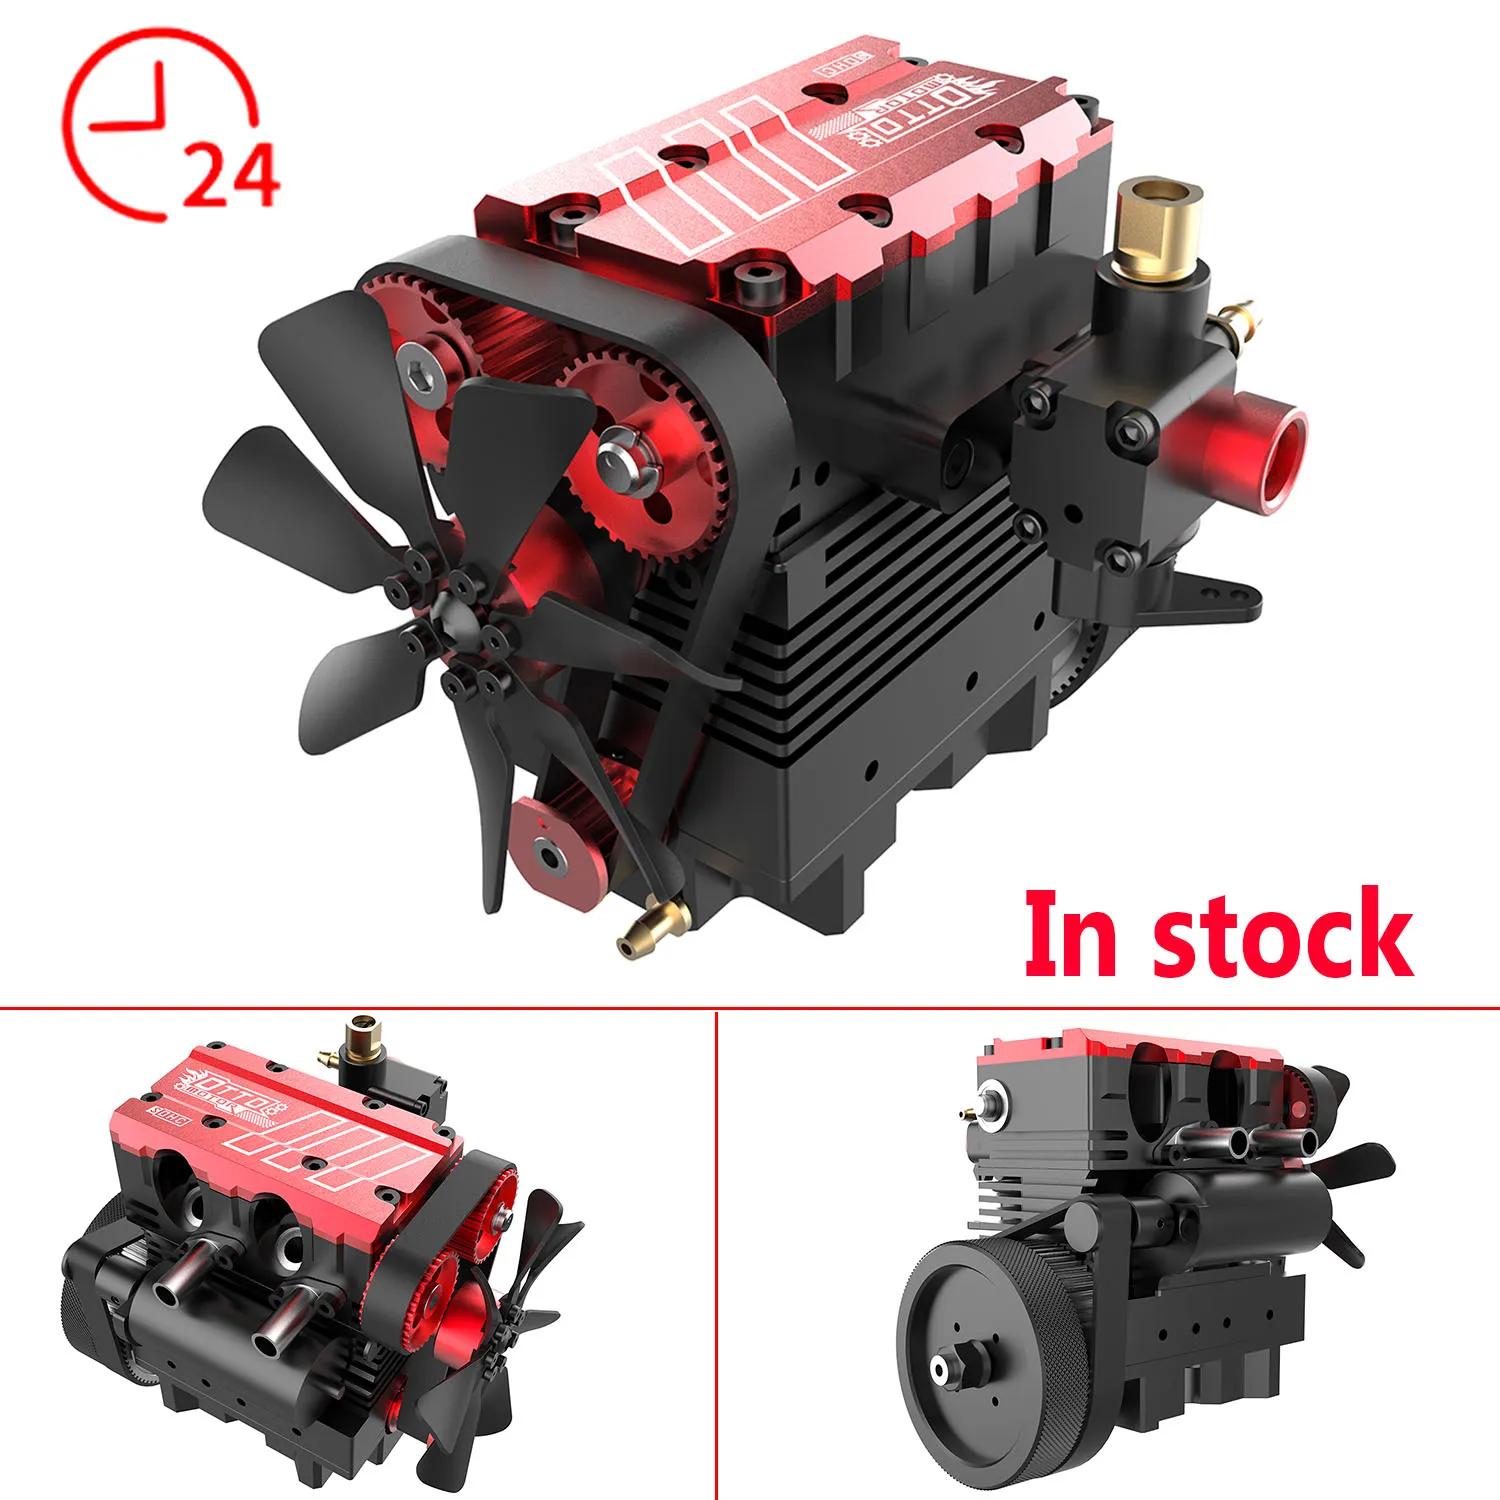 Mini Nitro Engine: Engine Components and Materials for Mini Nitro Engines